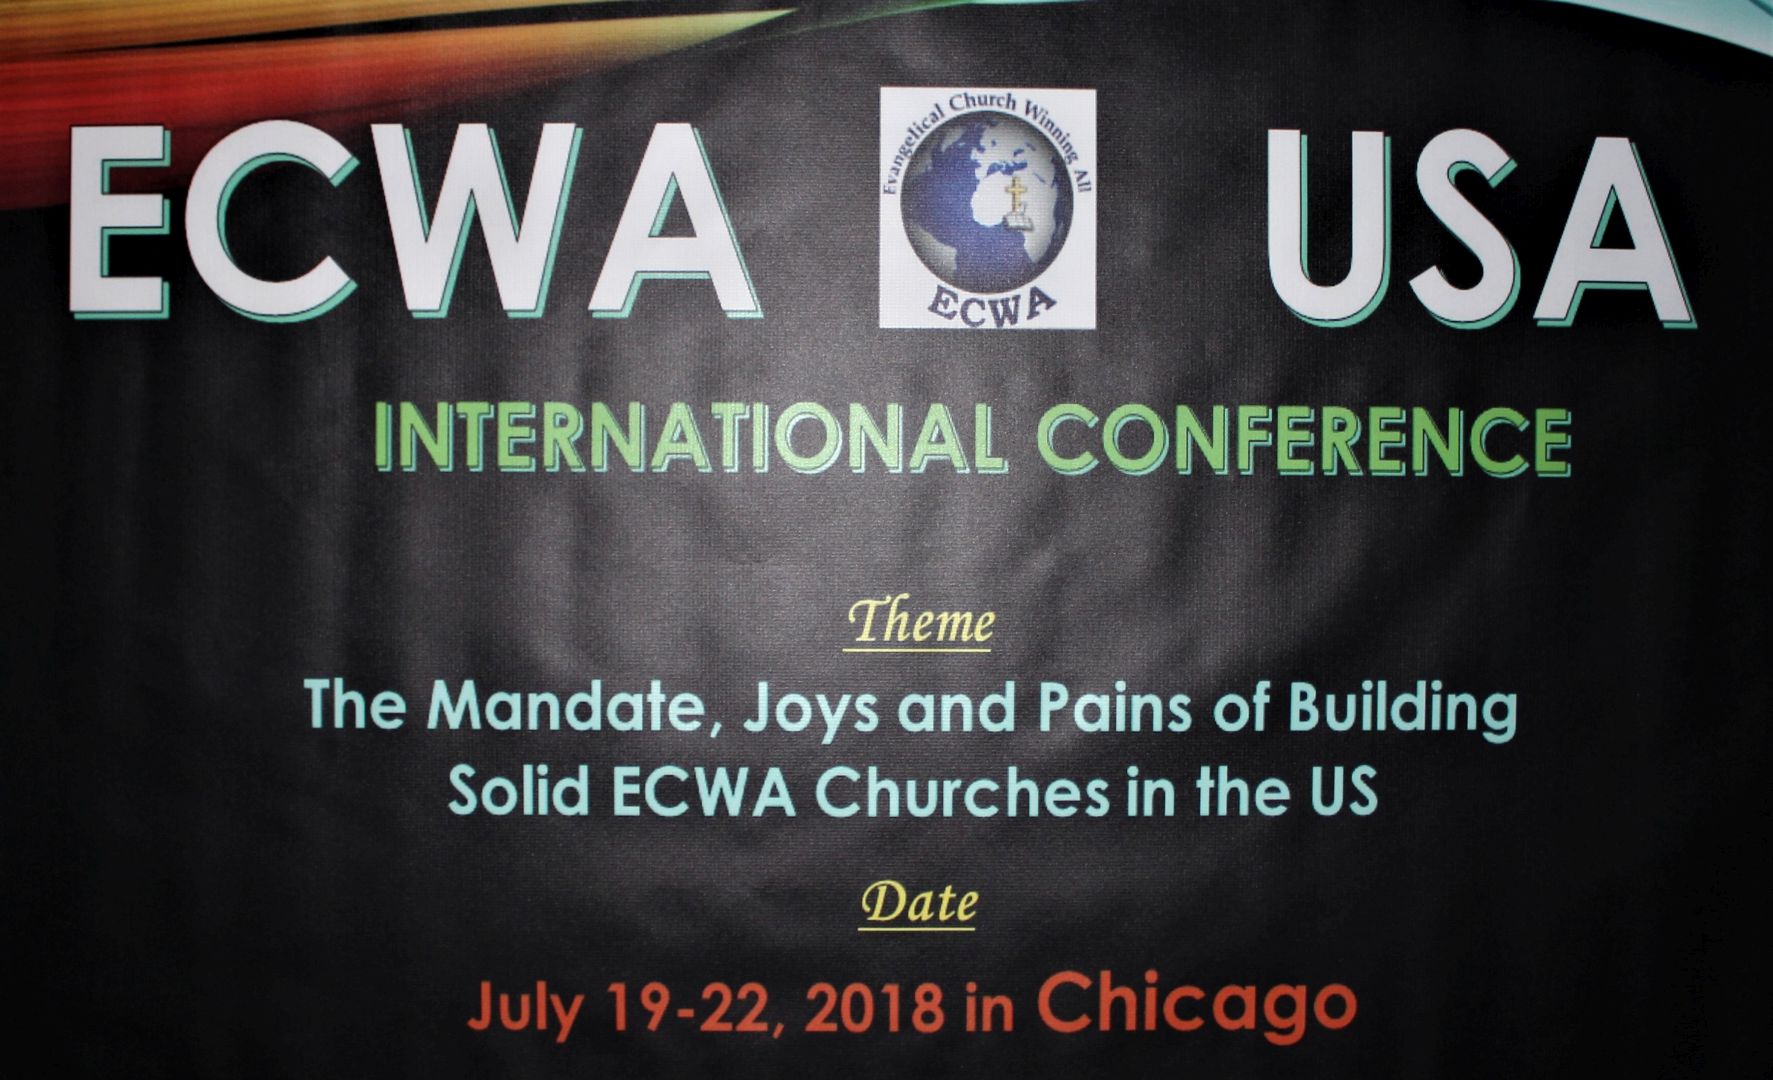 001 - ECWA USA 2018 International Conference in Chicago, IL, USA - Saturday, July 21, 2018